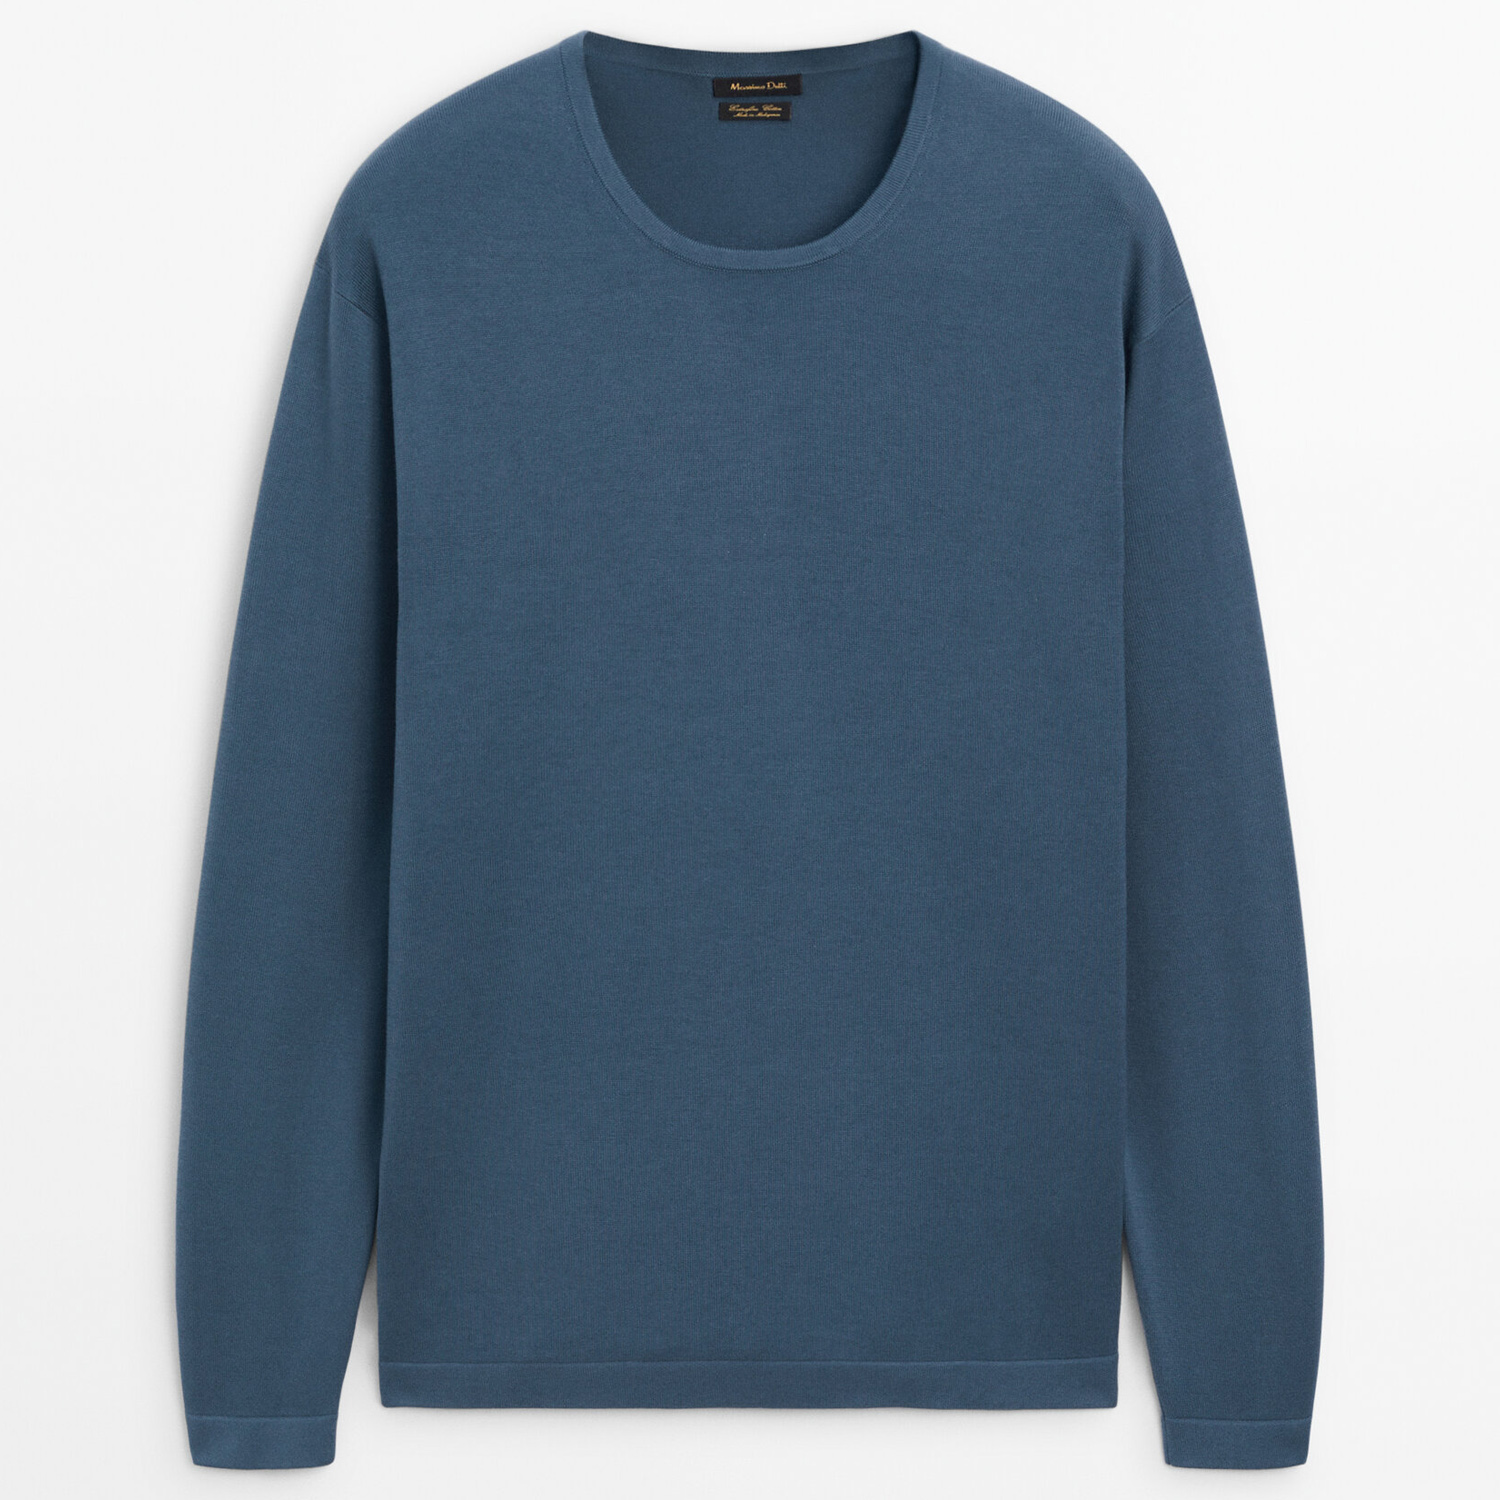 Свитер Massimo Dutti Crew Neck Knit, синий свитер massimo dutti crew neck limited edition тёмно бордовый